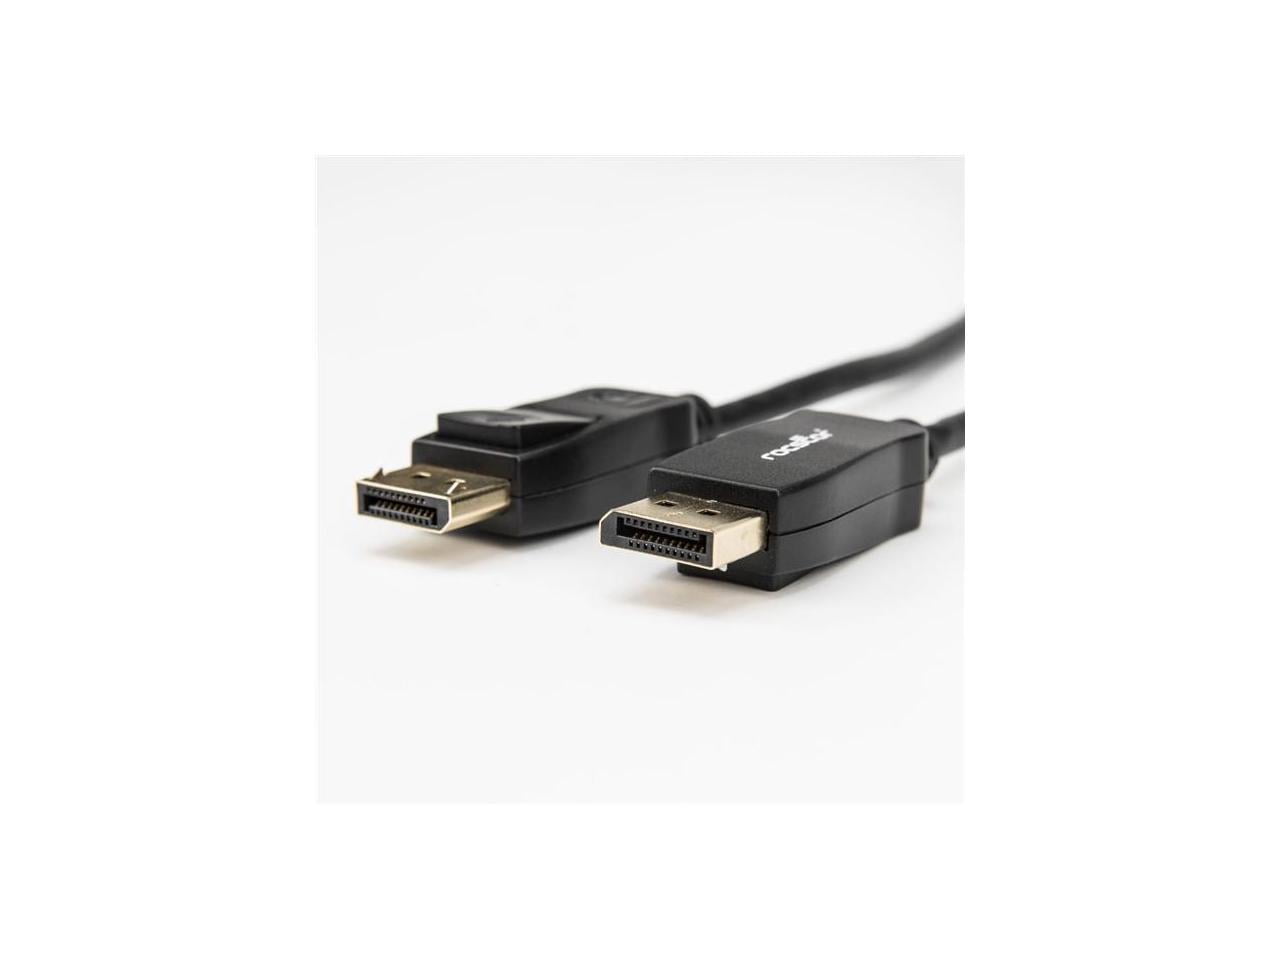 Rocstor Premium DisplayPort to HDMIÂ Converter Cable - 6 ft